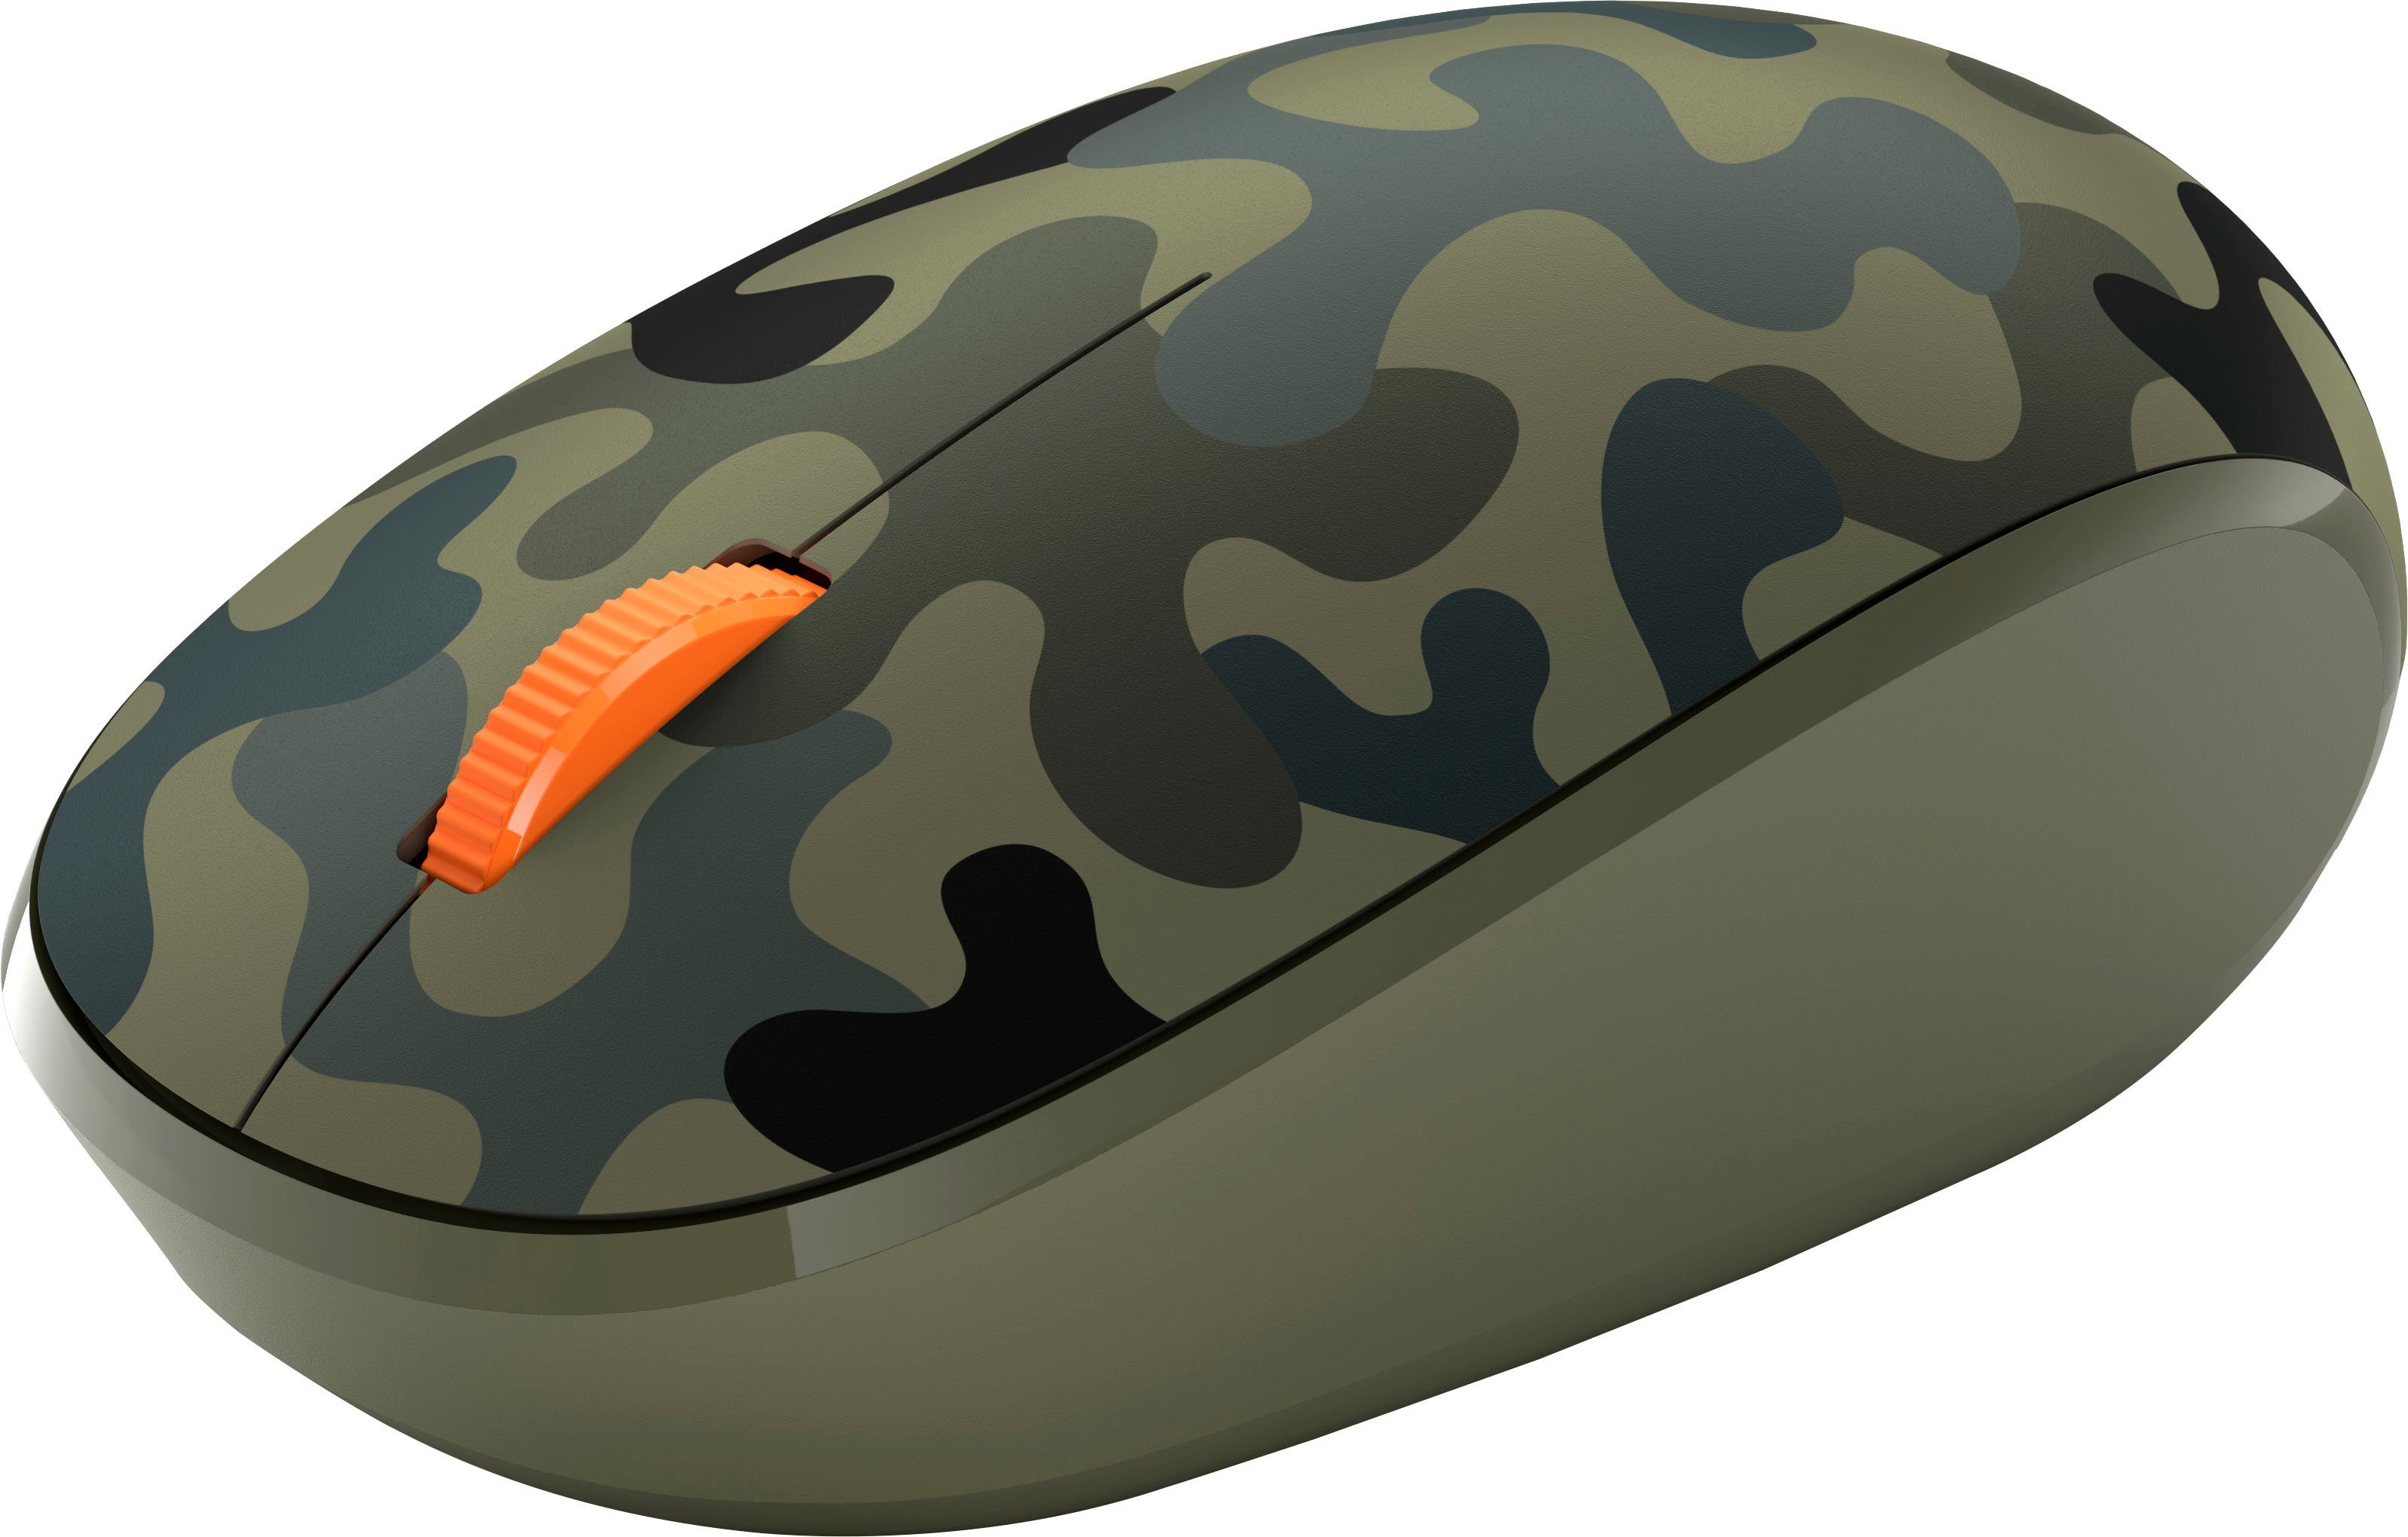 Microsoft Bluetooth Maus SE Mouse Green Bluetooth Grün Camo